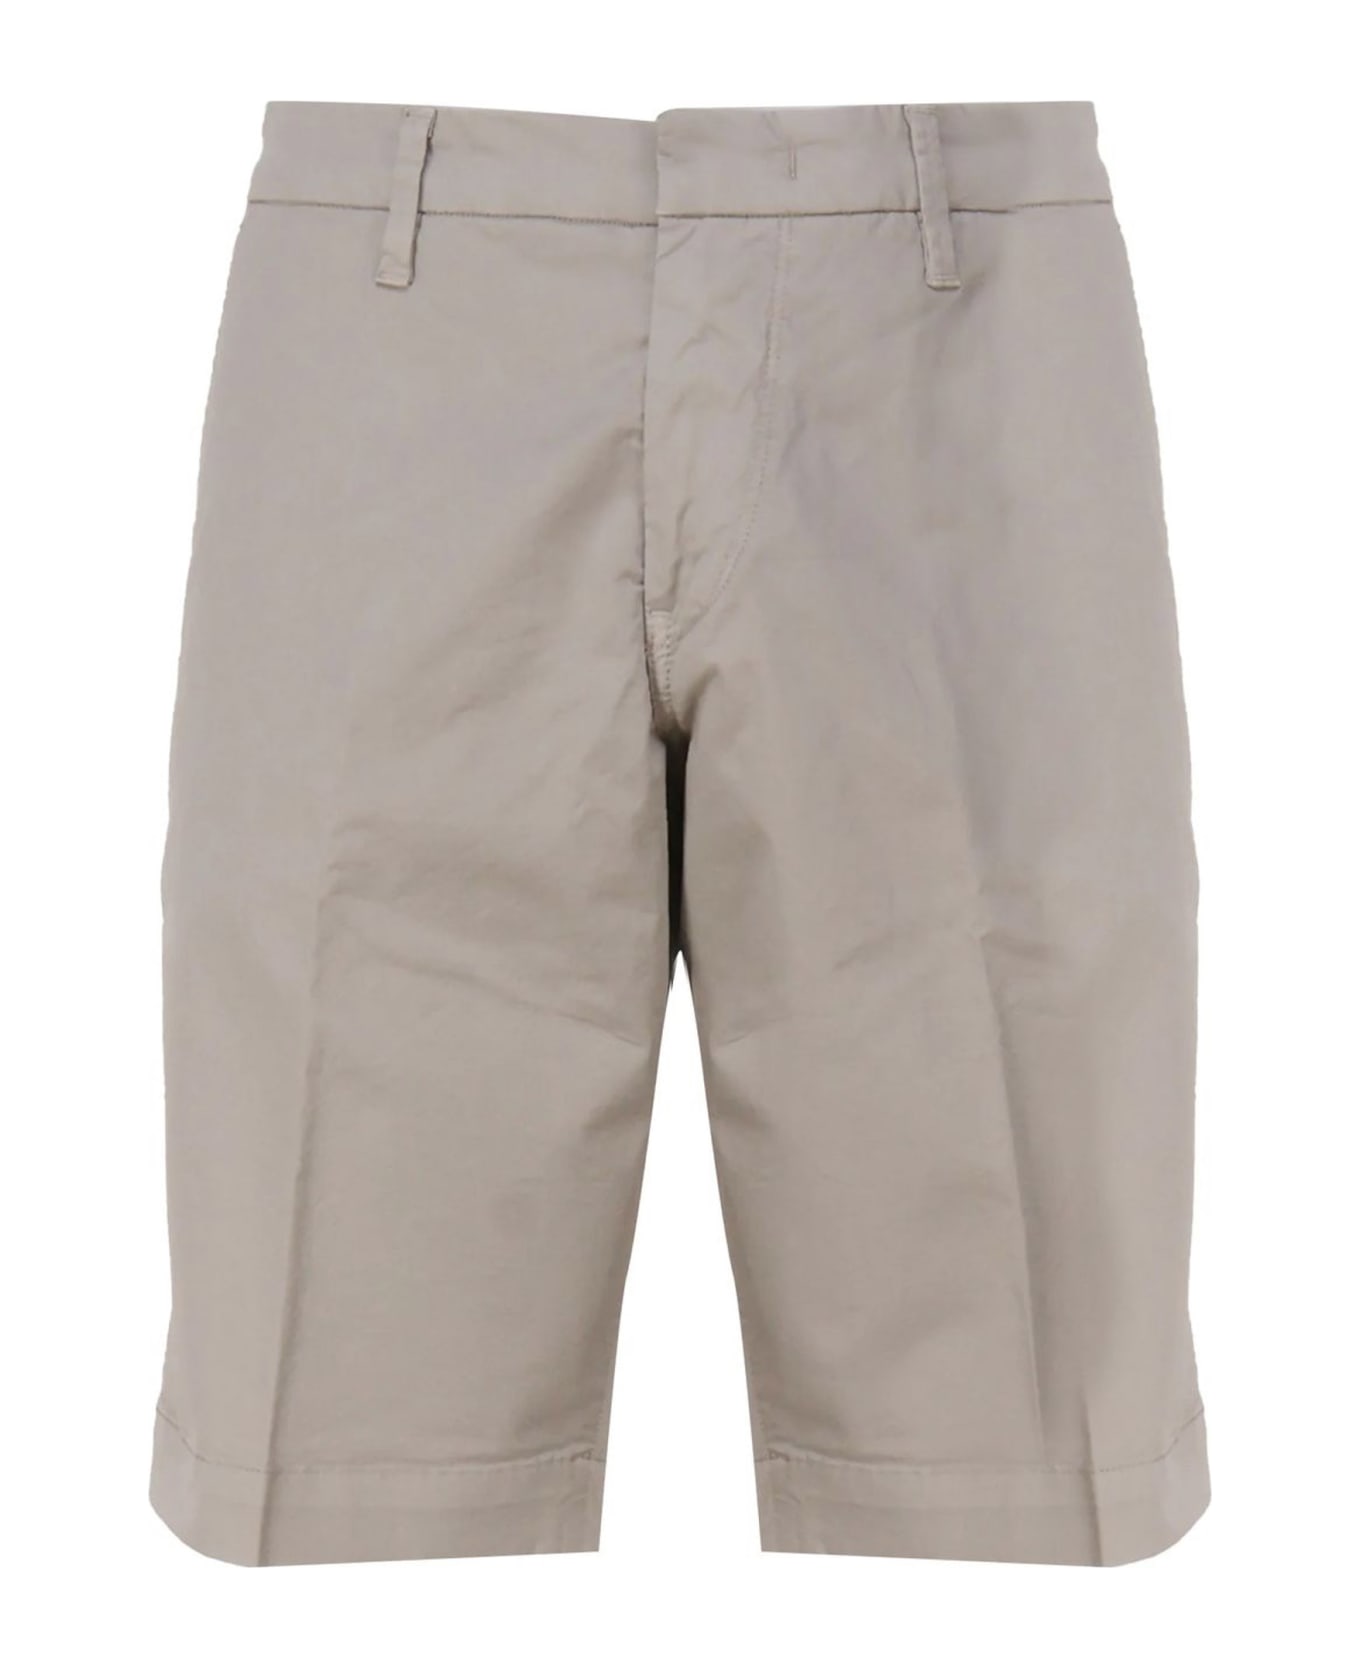 Fay Beige Stretch Cotton Shorts - Grey ショートパンツ